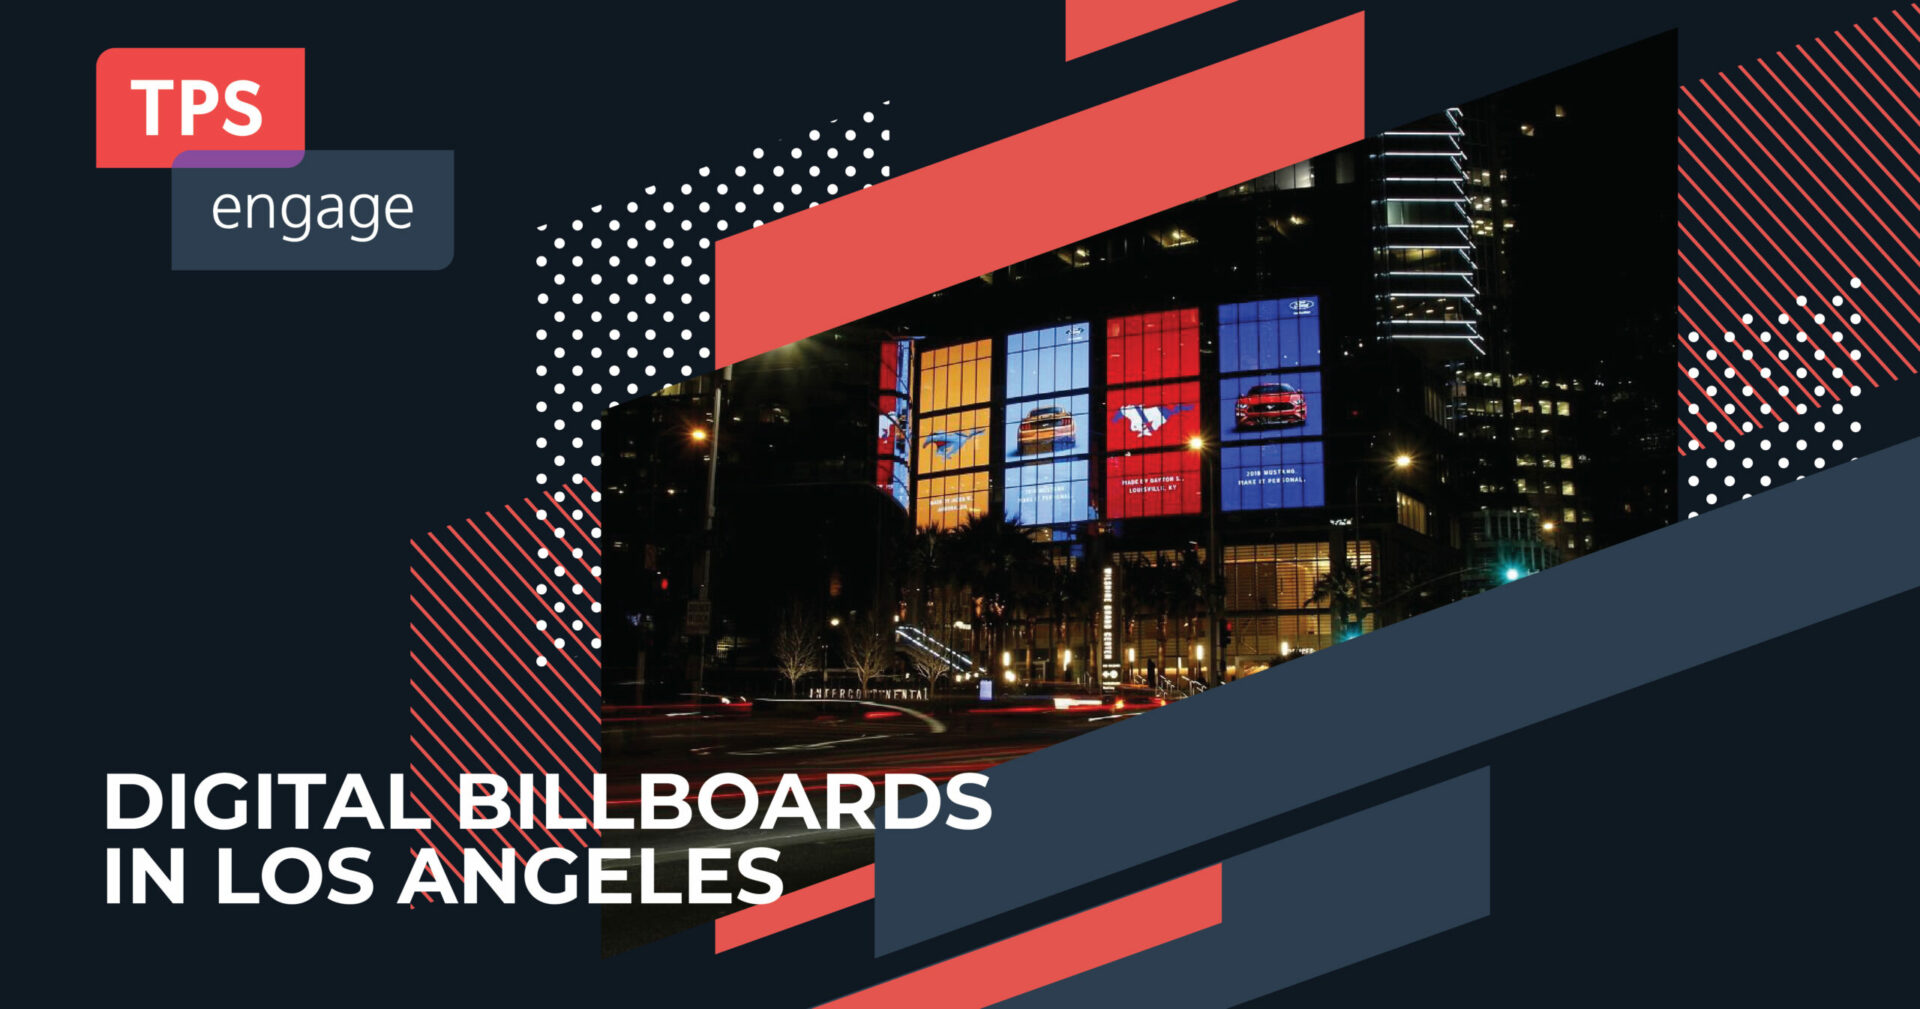 Digital billboards in Los Angeles cover